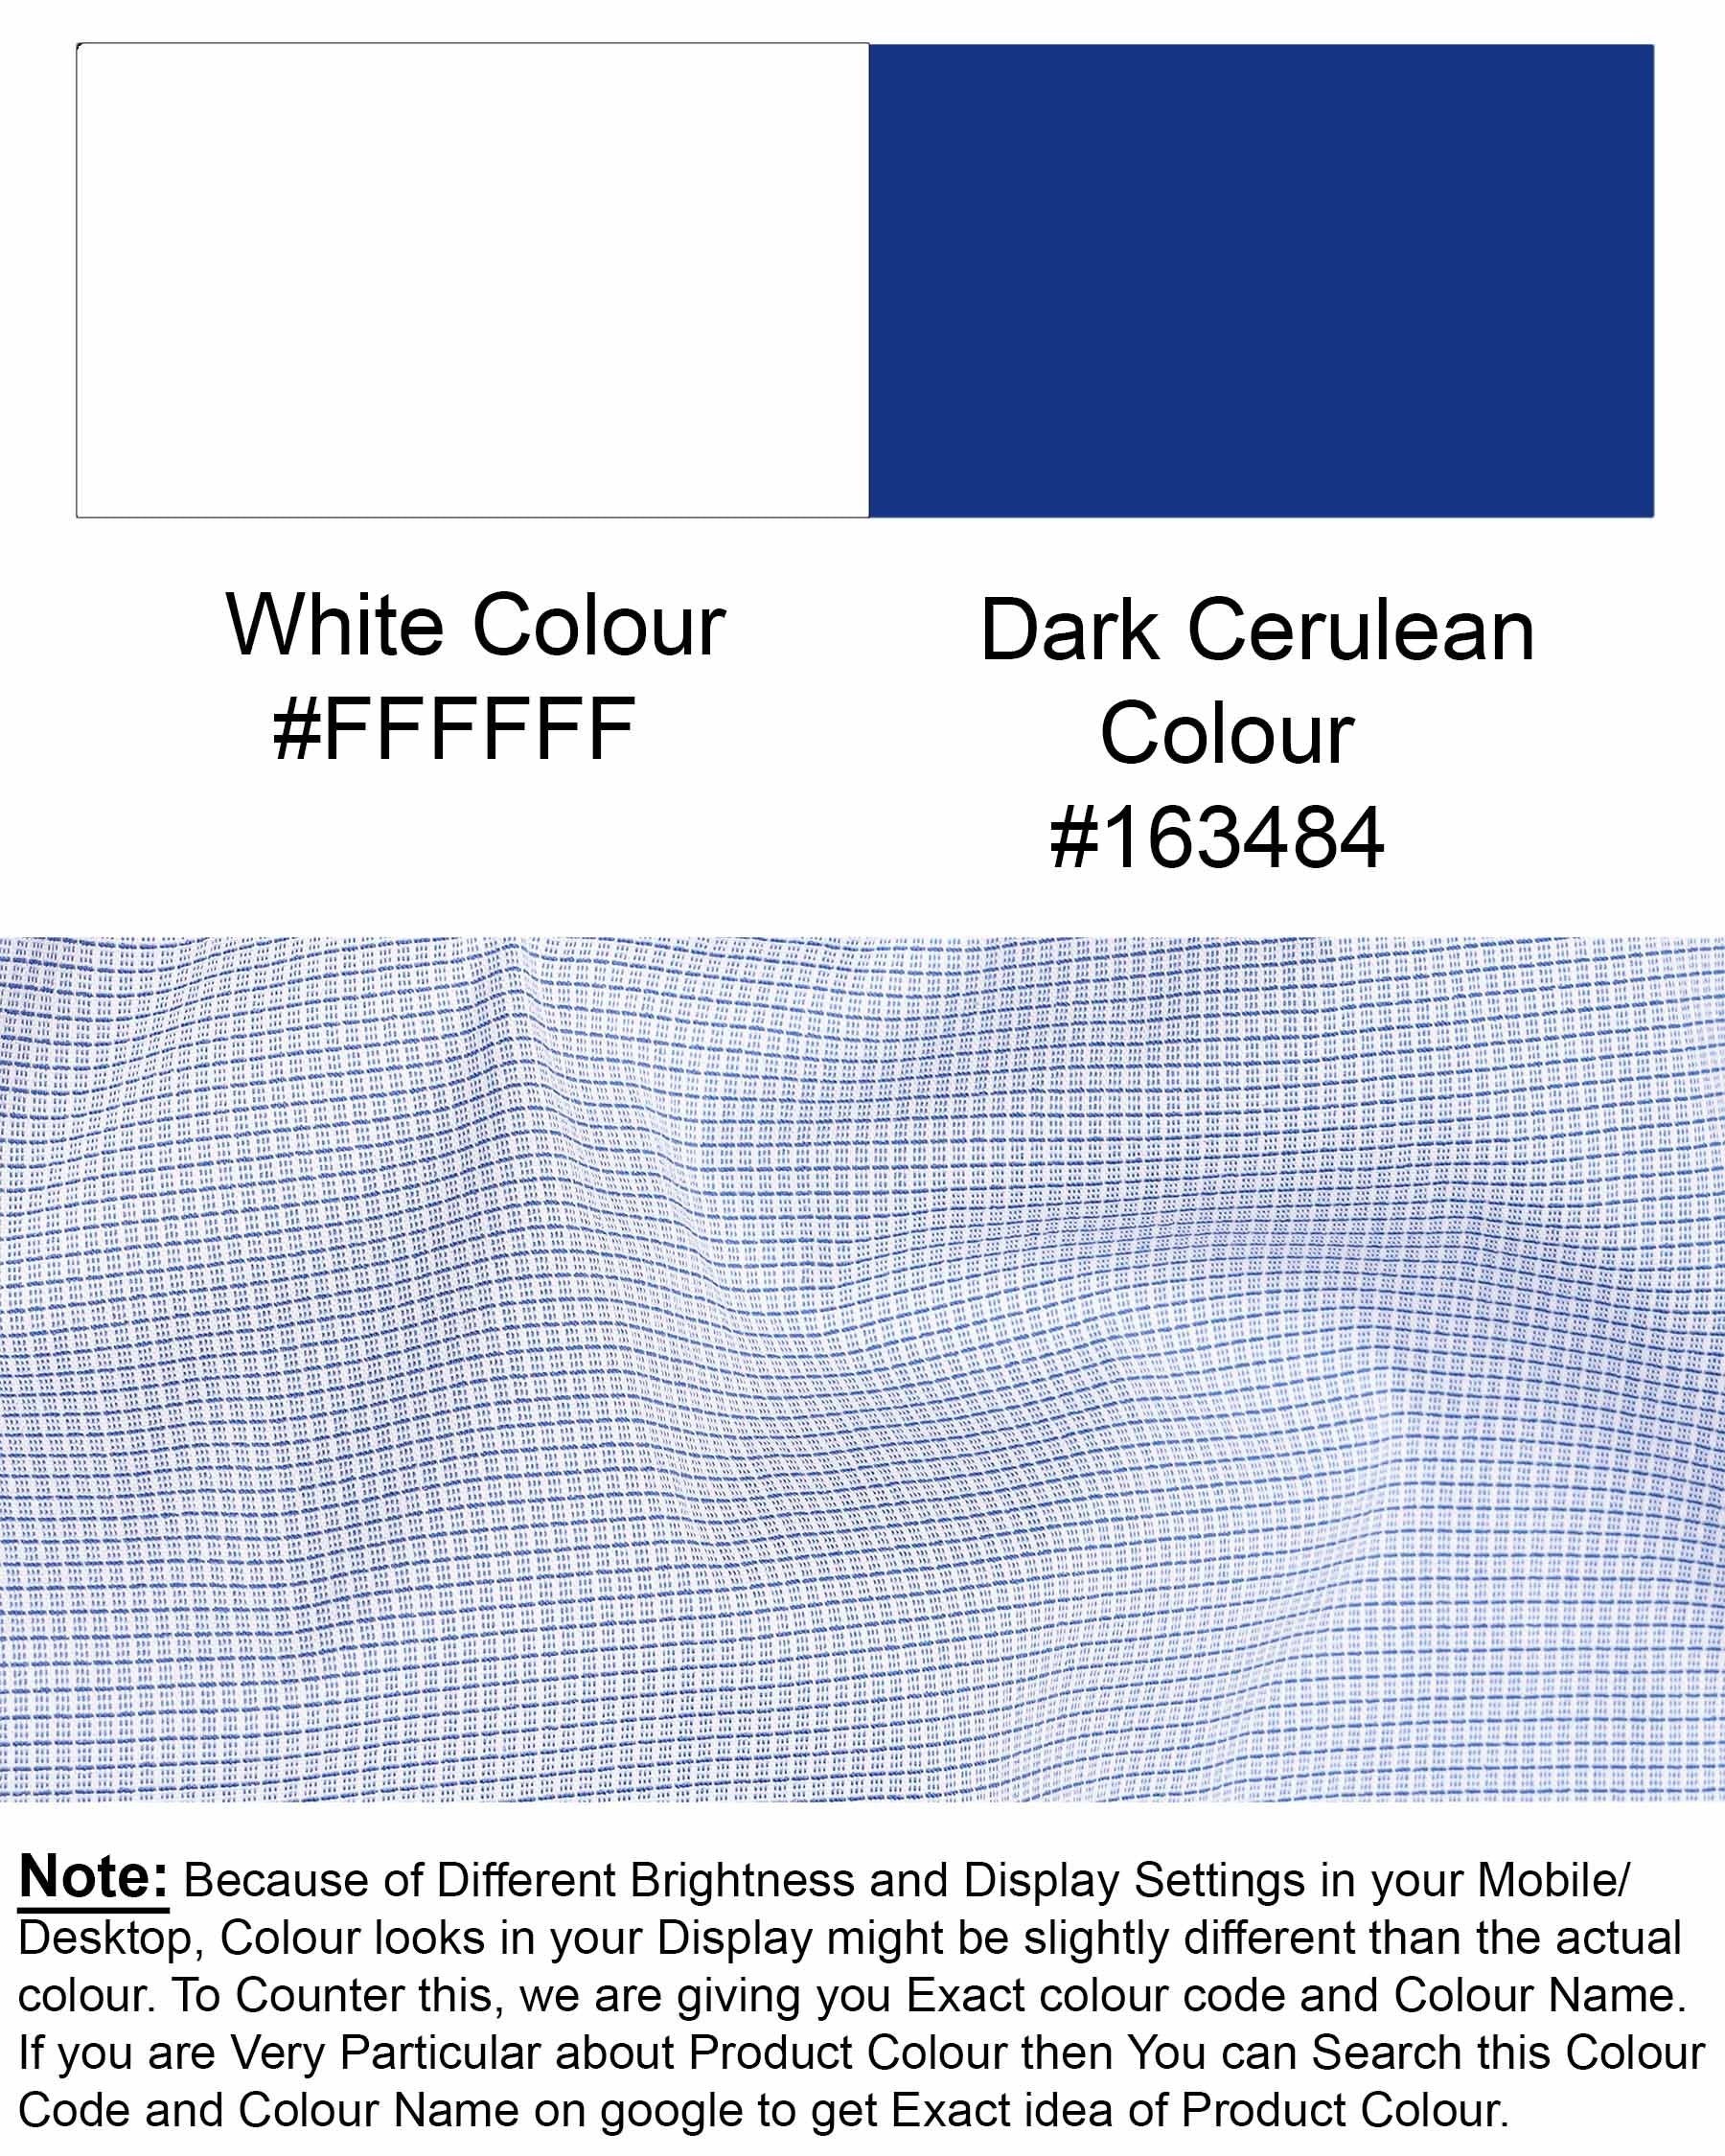 Dark Cerulean Blue and White Checkered Premium Cotton Shirt 7173-CA-38,7173-CA-H-38,7173-CA-39,7173-CA-H-39,7173-CA-40,7173-CA-H-40,7173-CA-42,7173-CA-H-42,7173-CA-44,7173-CA-H-44,7173-CA-46,7173-CA-H-46,7173-CA-48,7173-CA-H-48,7173-CA-50,7173-CA-H-50,7173-CA-52,7173-CA-H-52